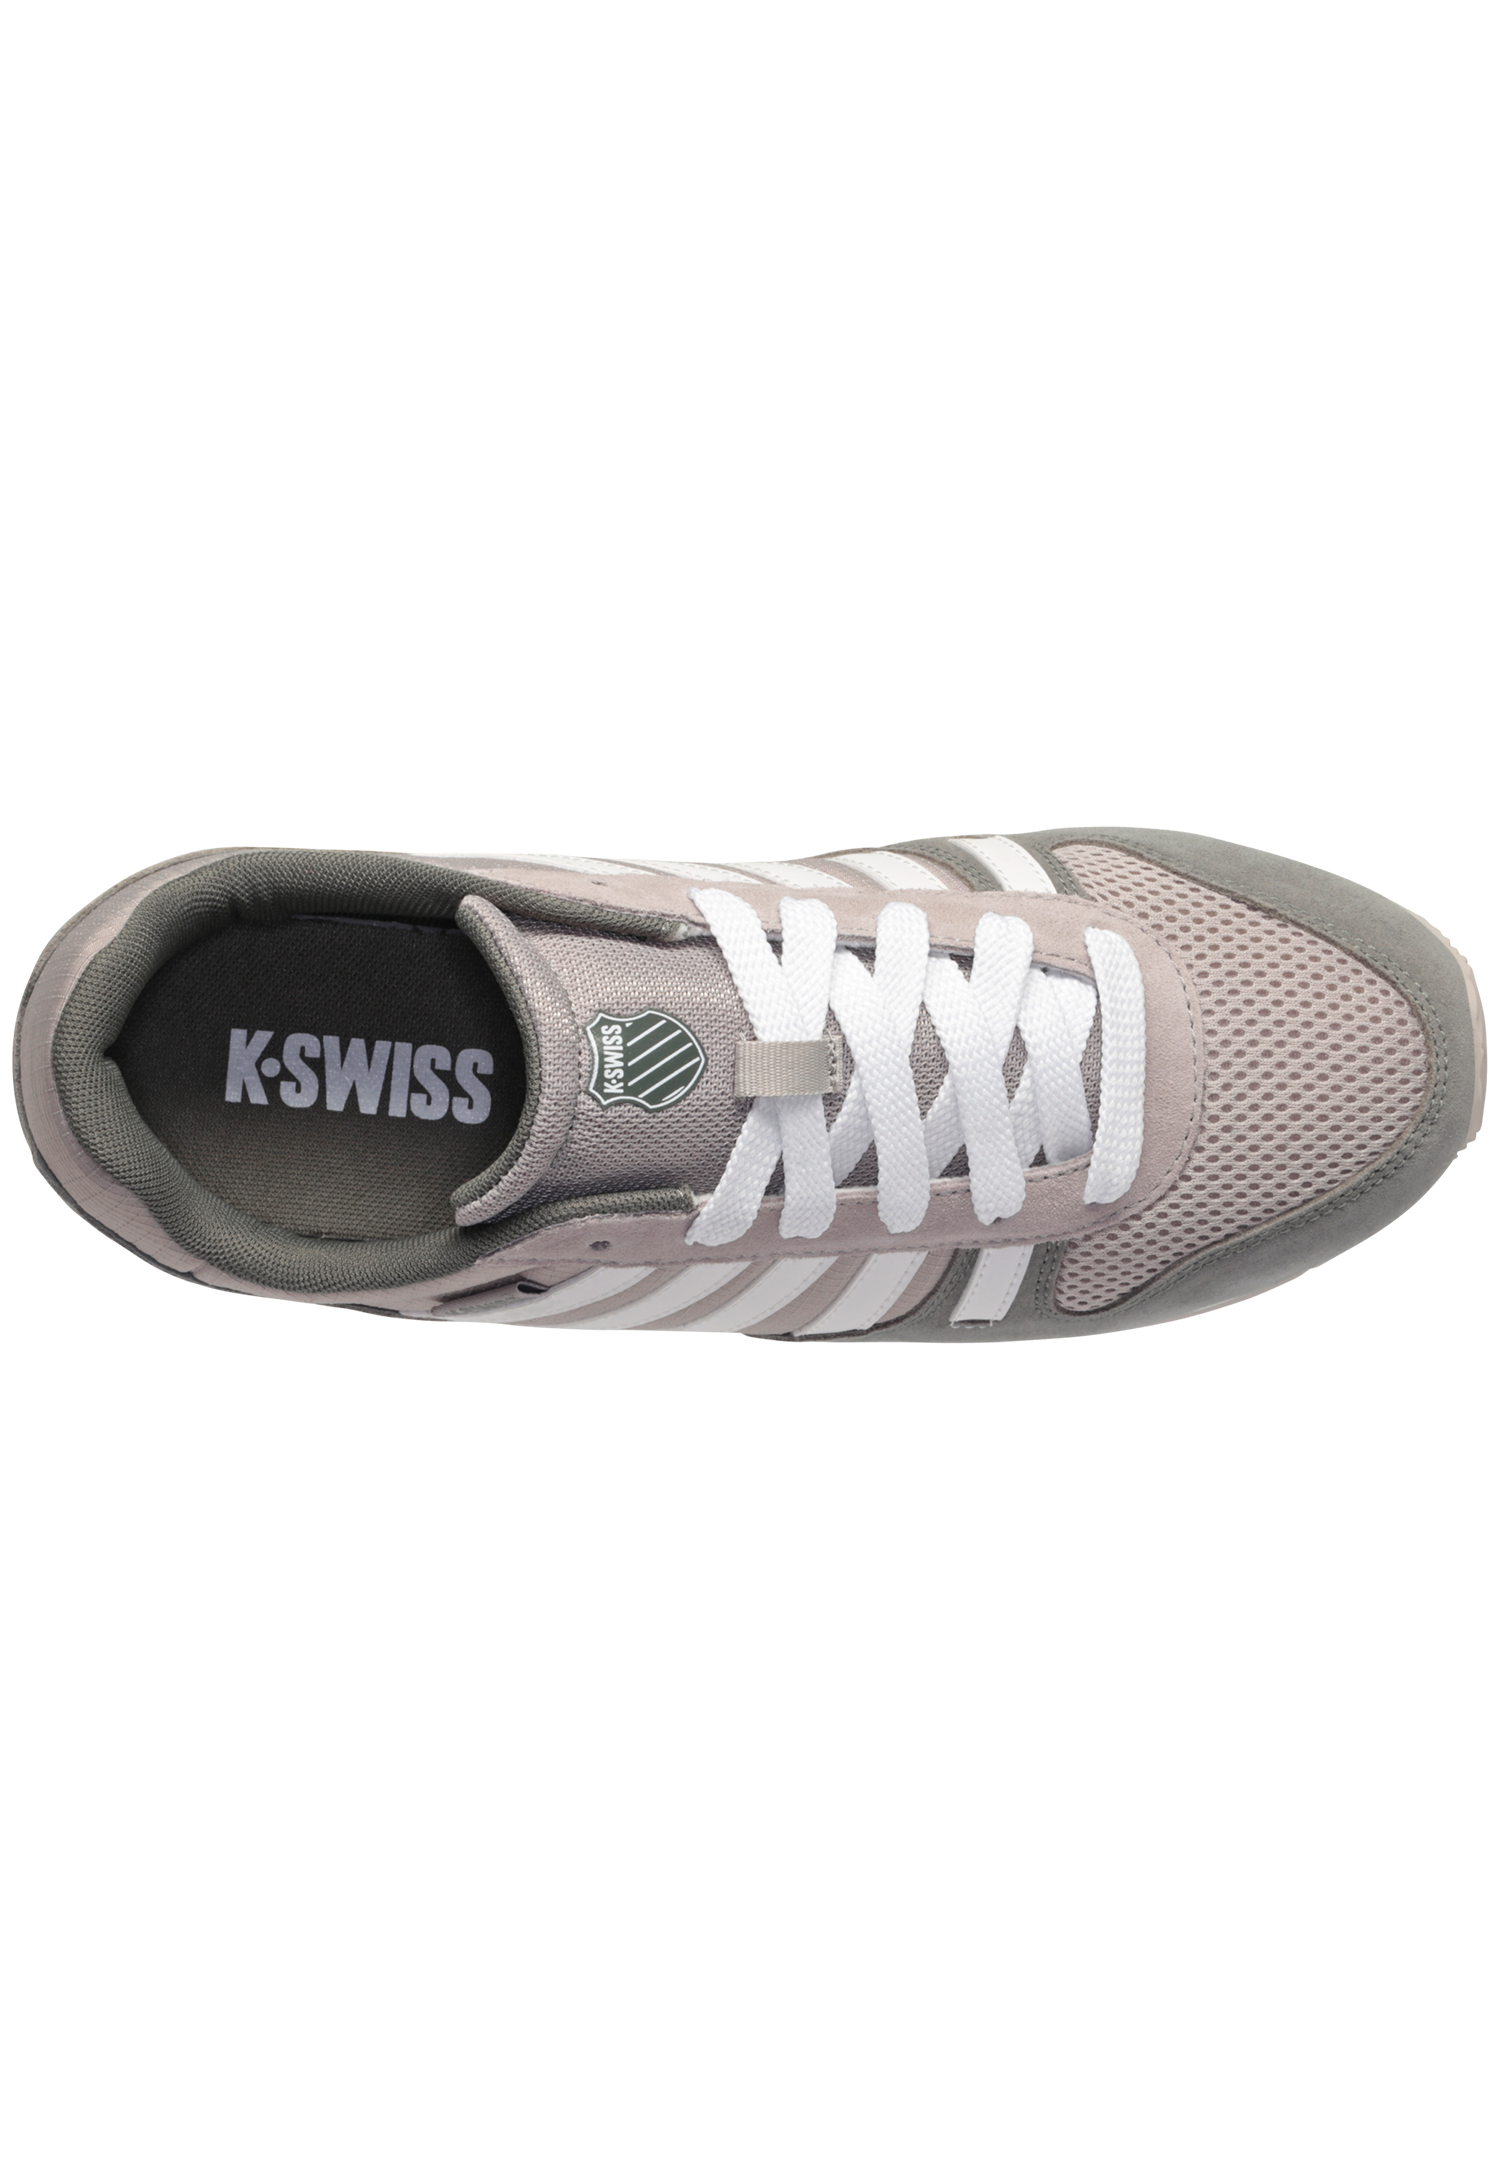 K-SWISS Granada Herren Sneaker Sportschuh 06927-294-M grau